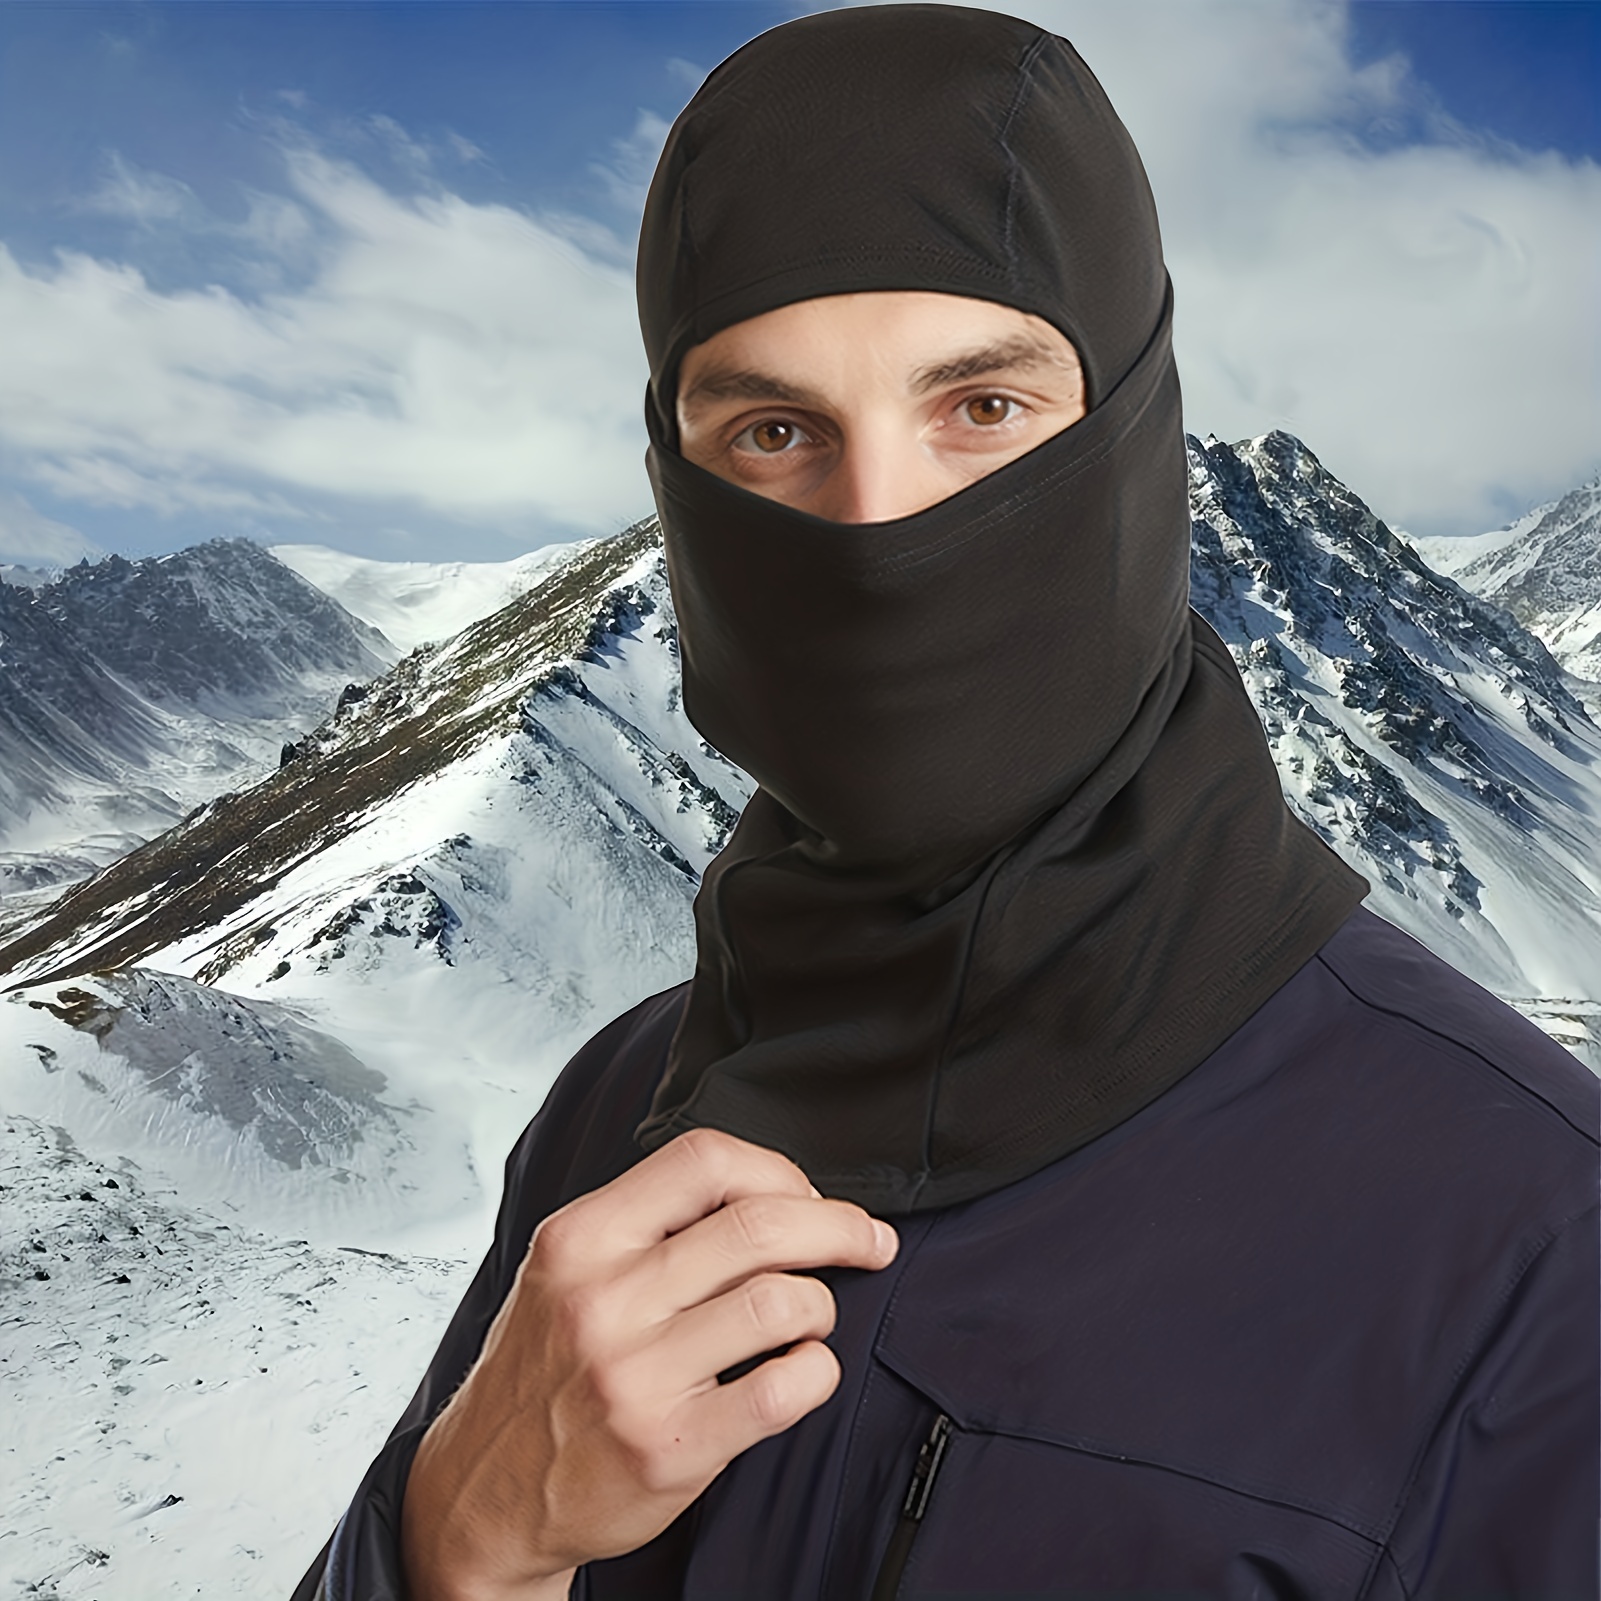 Balaclava Ski Mask Winter Thermal Face Mask Cover for Men Women